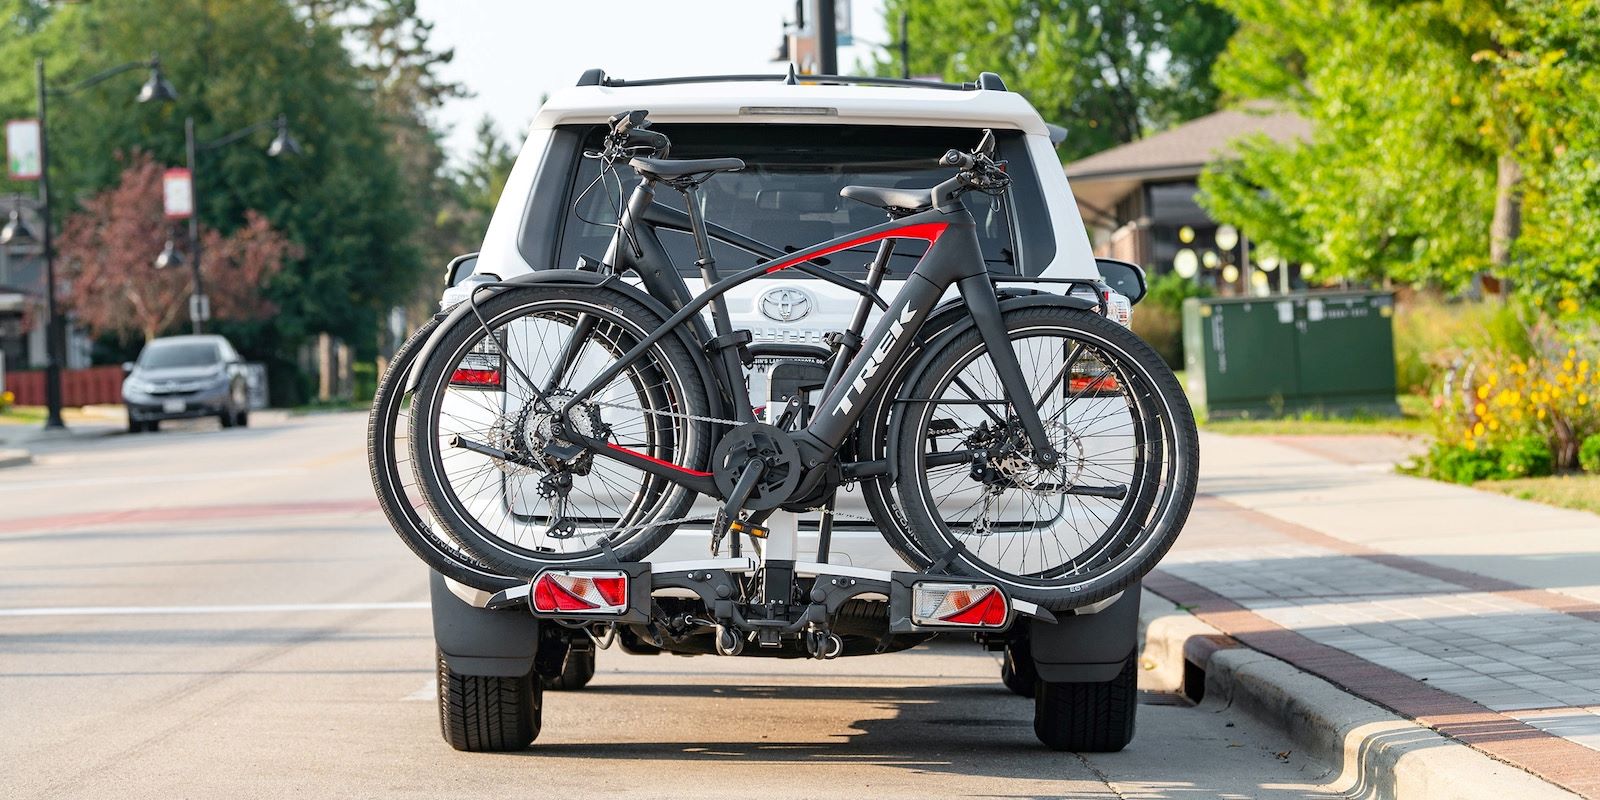 Car Bike Rack Review: Top Options for Easy Transportation